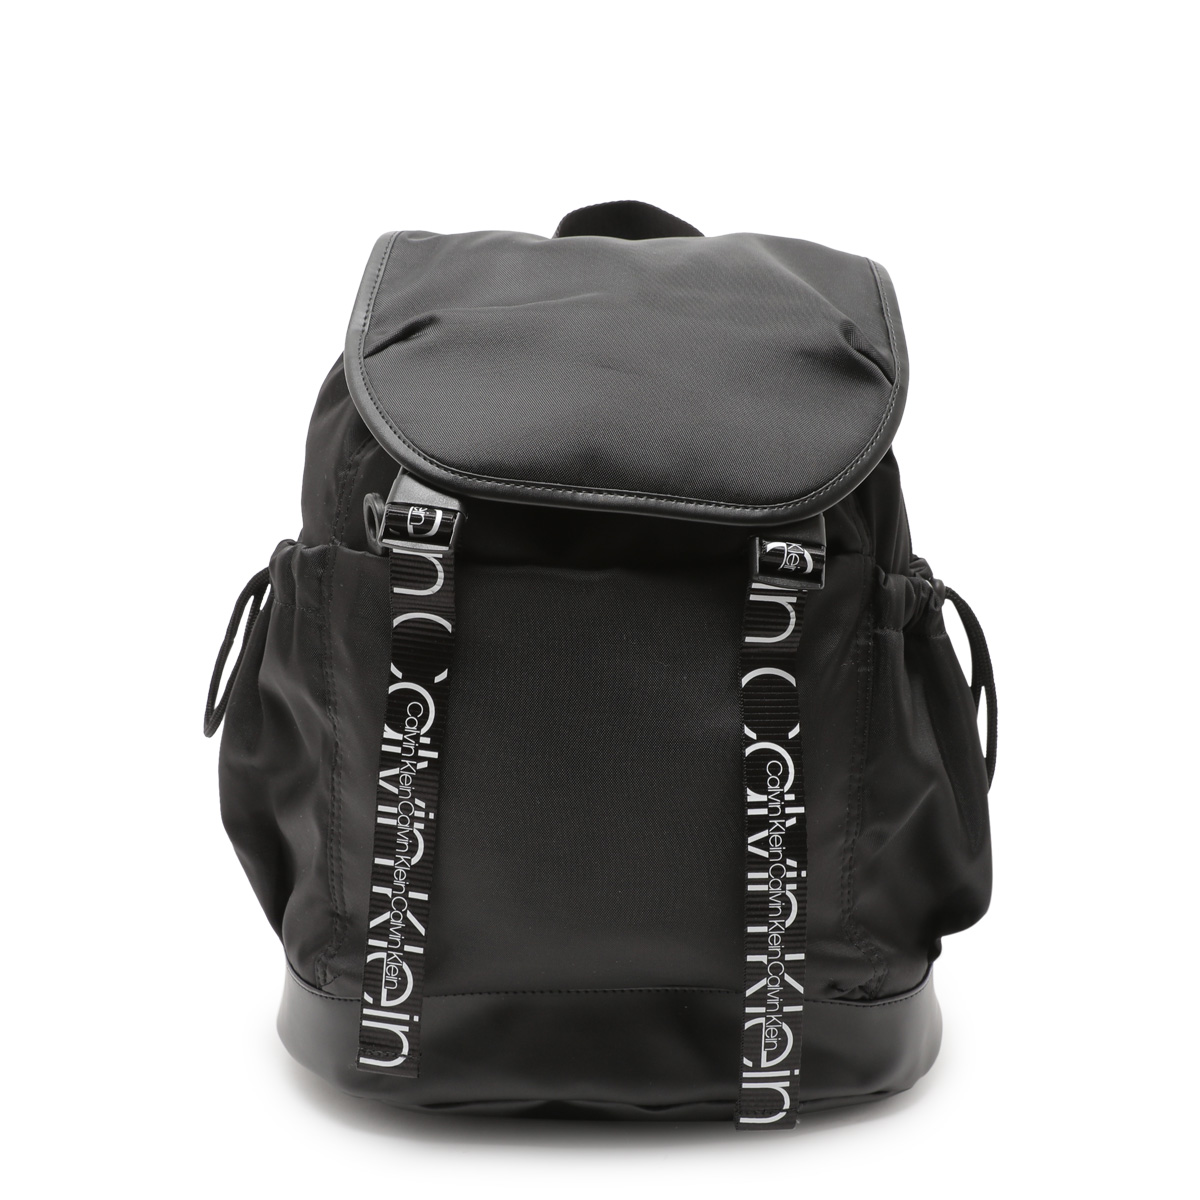 calvin klein backpack man